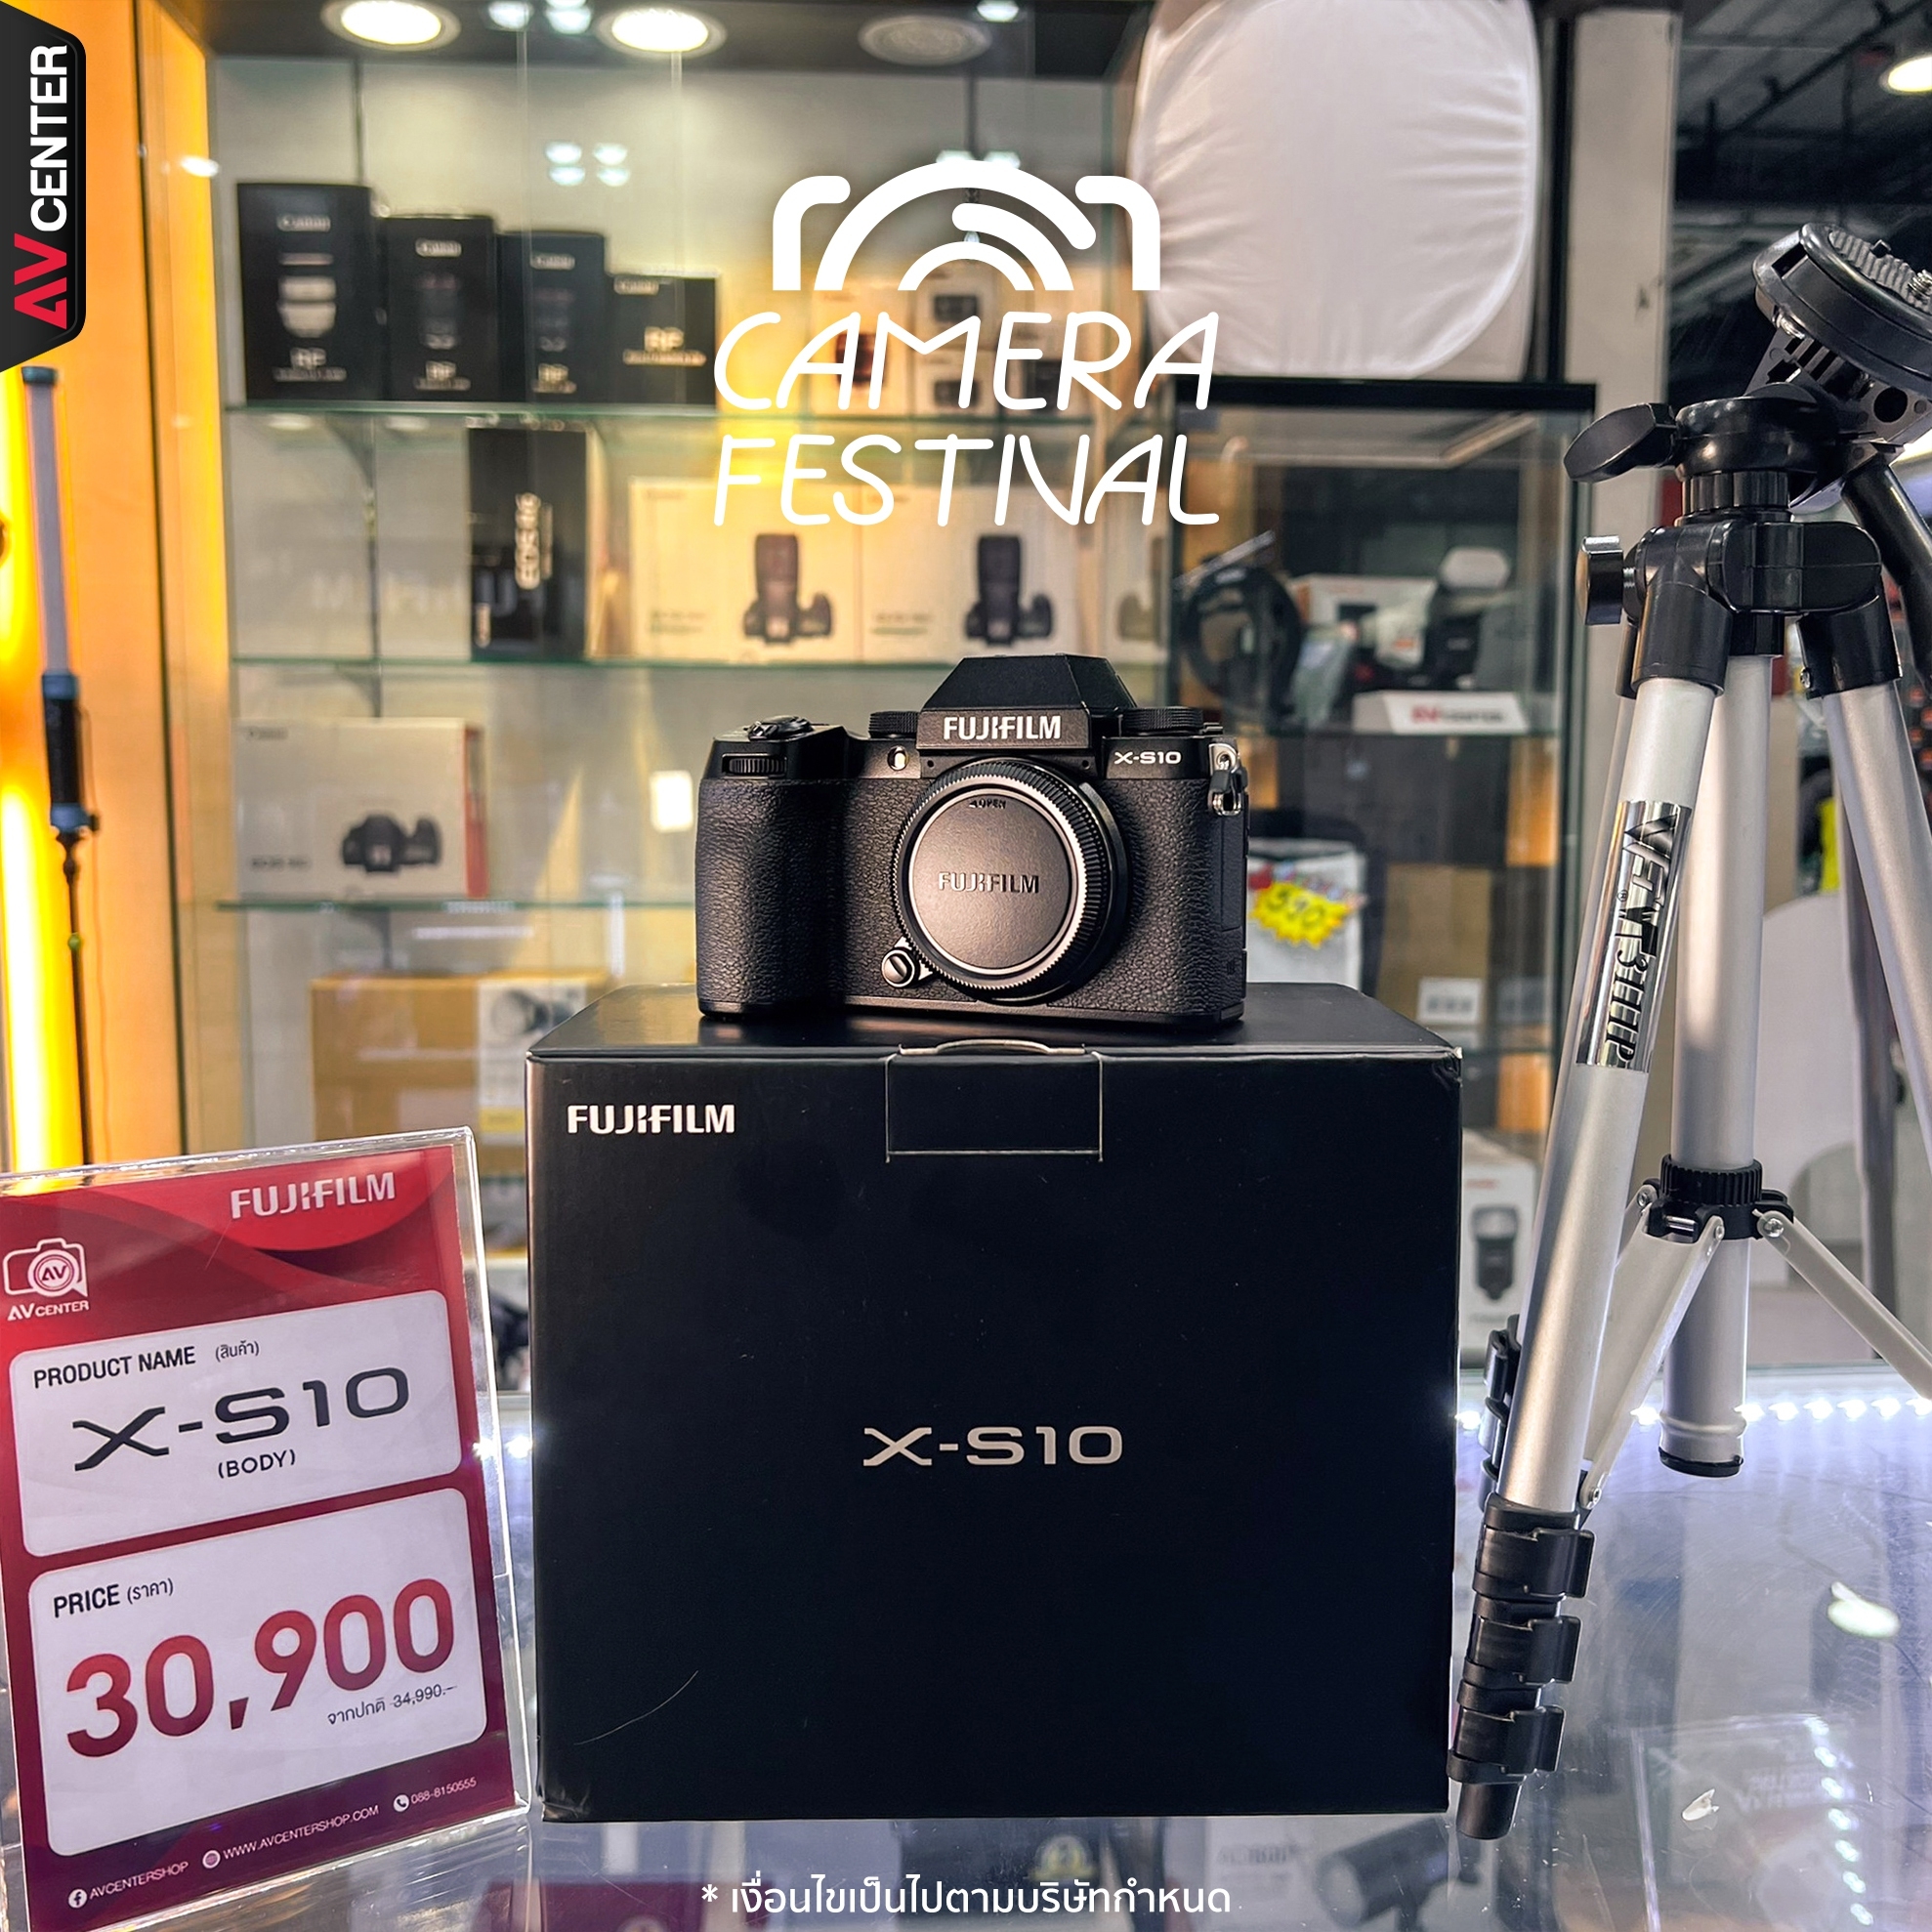 Fujifilm Camera X-S10 (body)